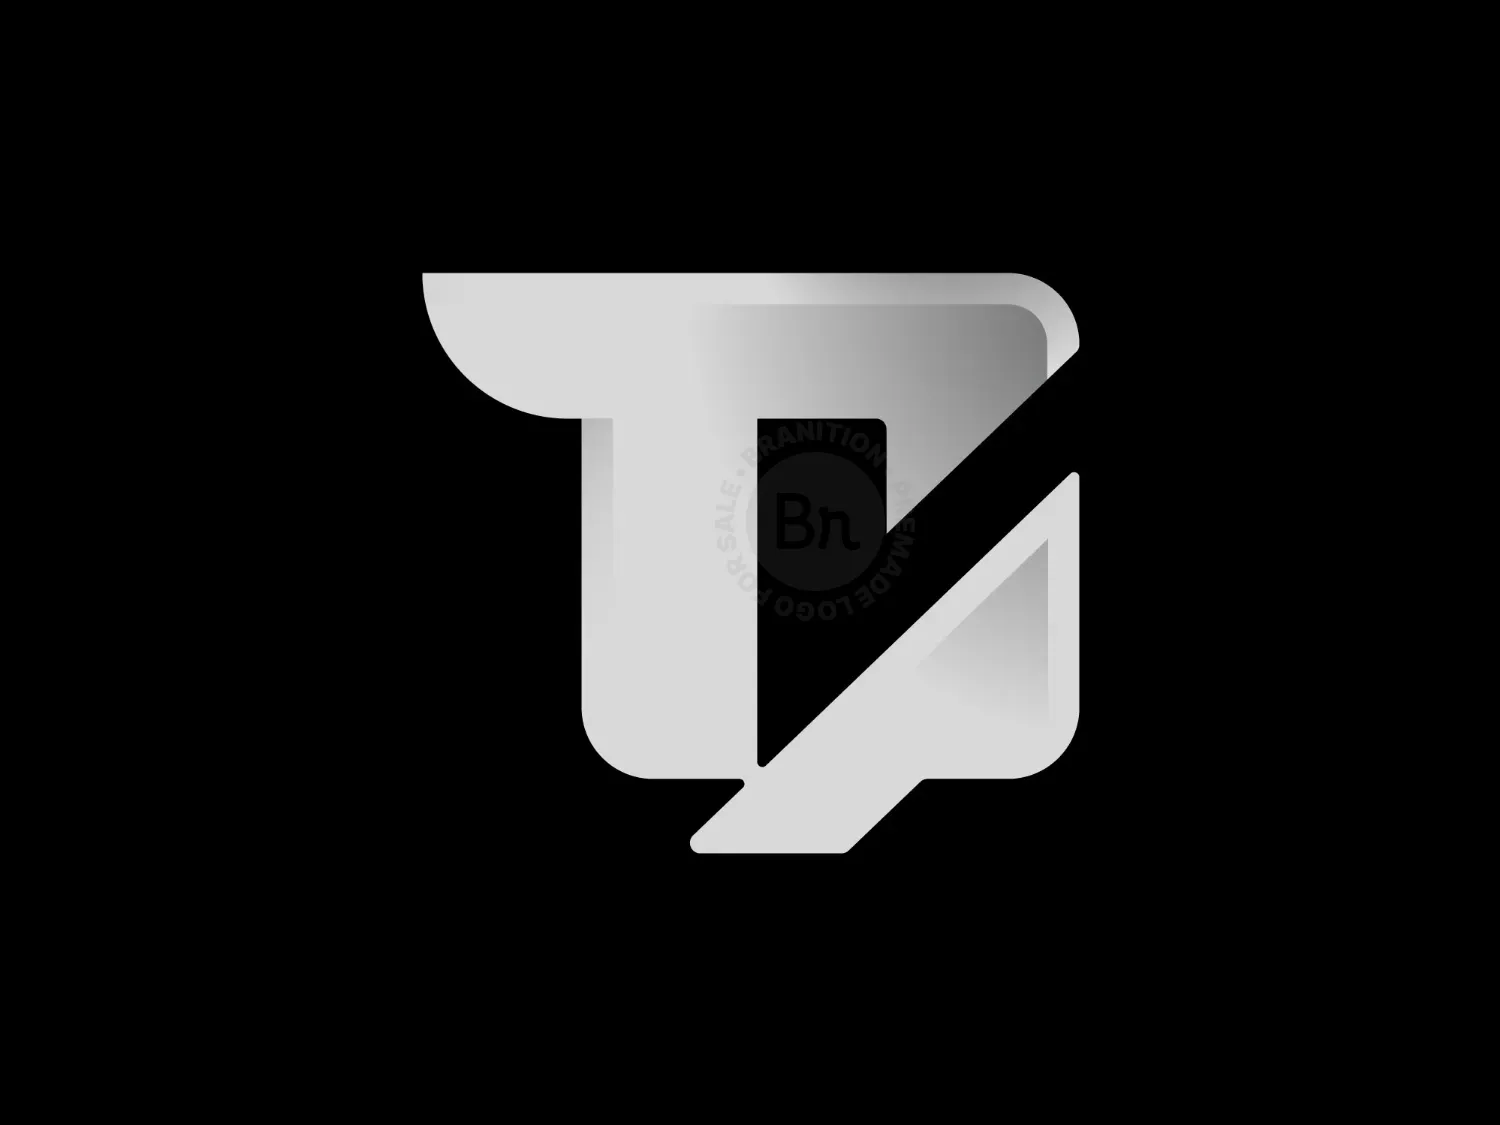 Tg initial handwriting logo design Royalty Free Vector Image